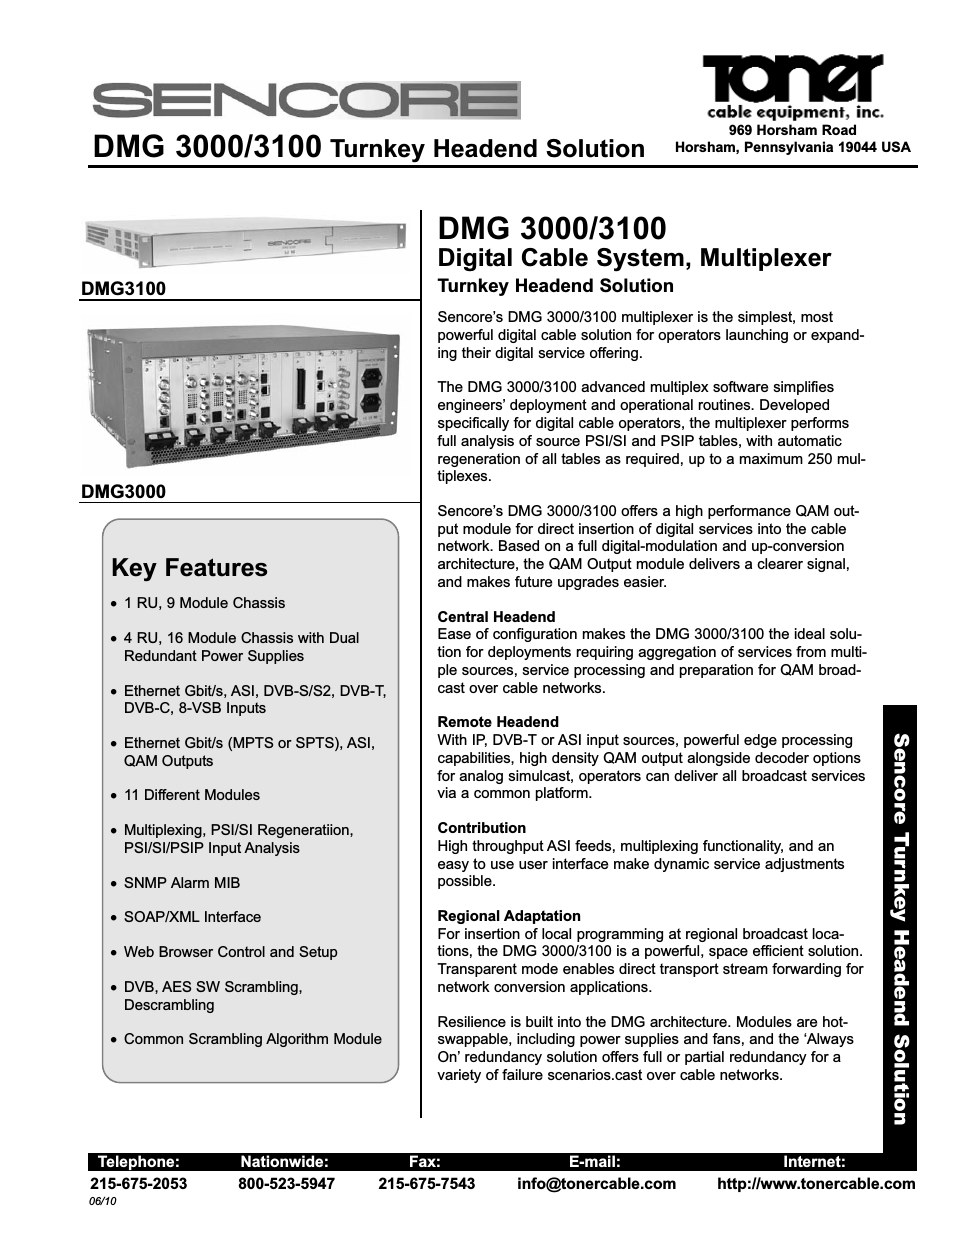 DMG 3000 _ 3100 Digital Cable System, Multiplexer